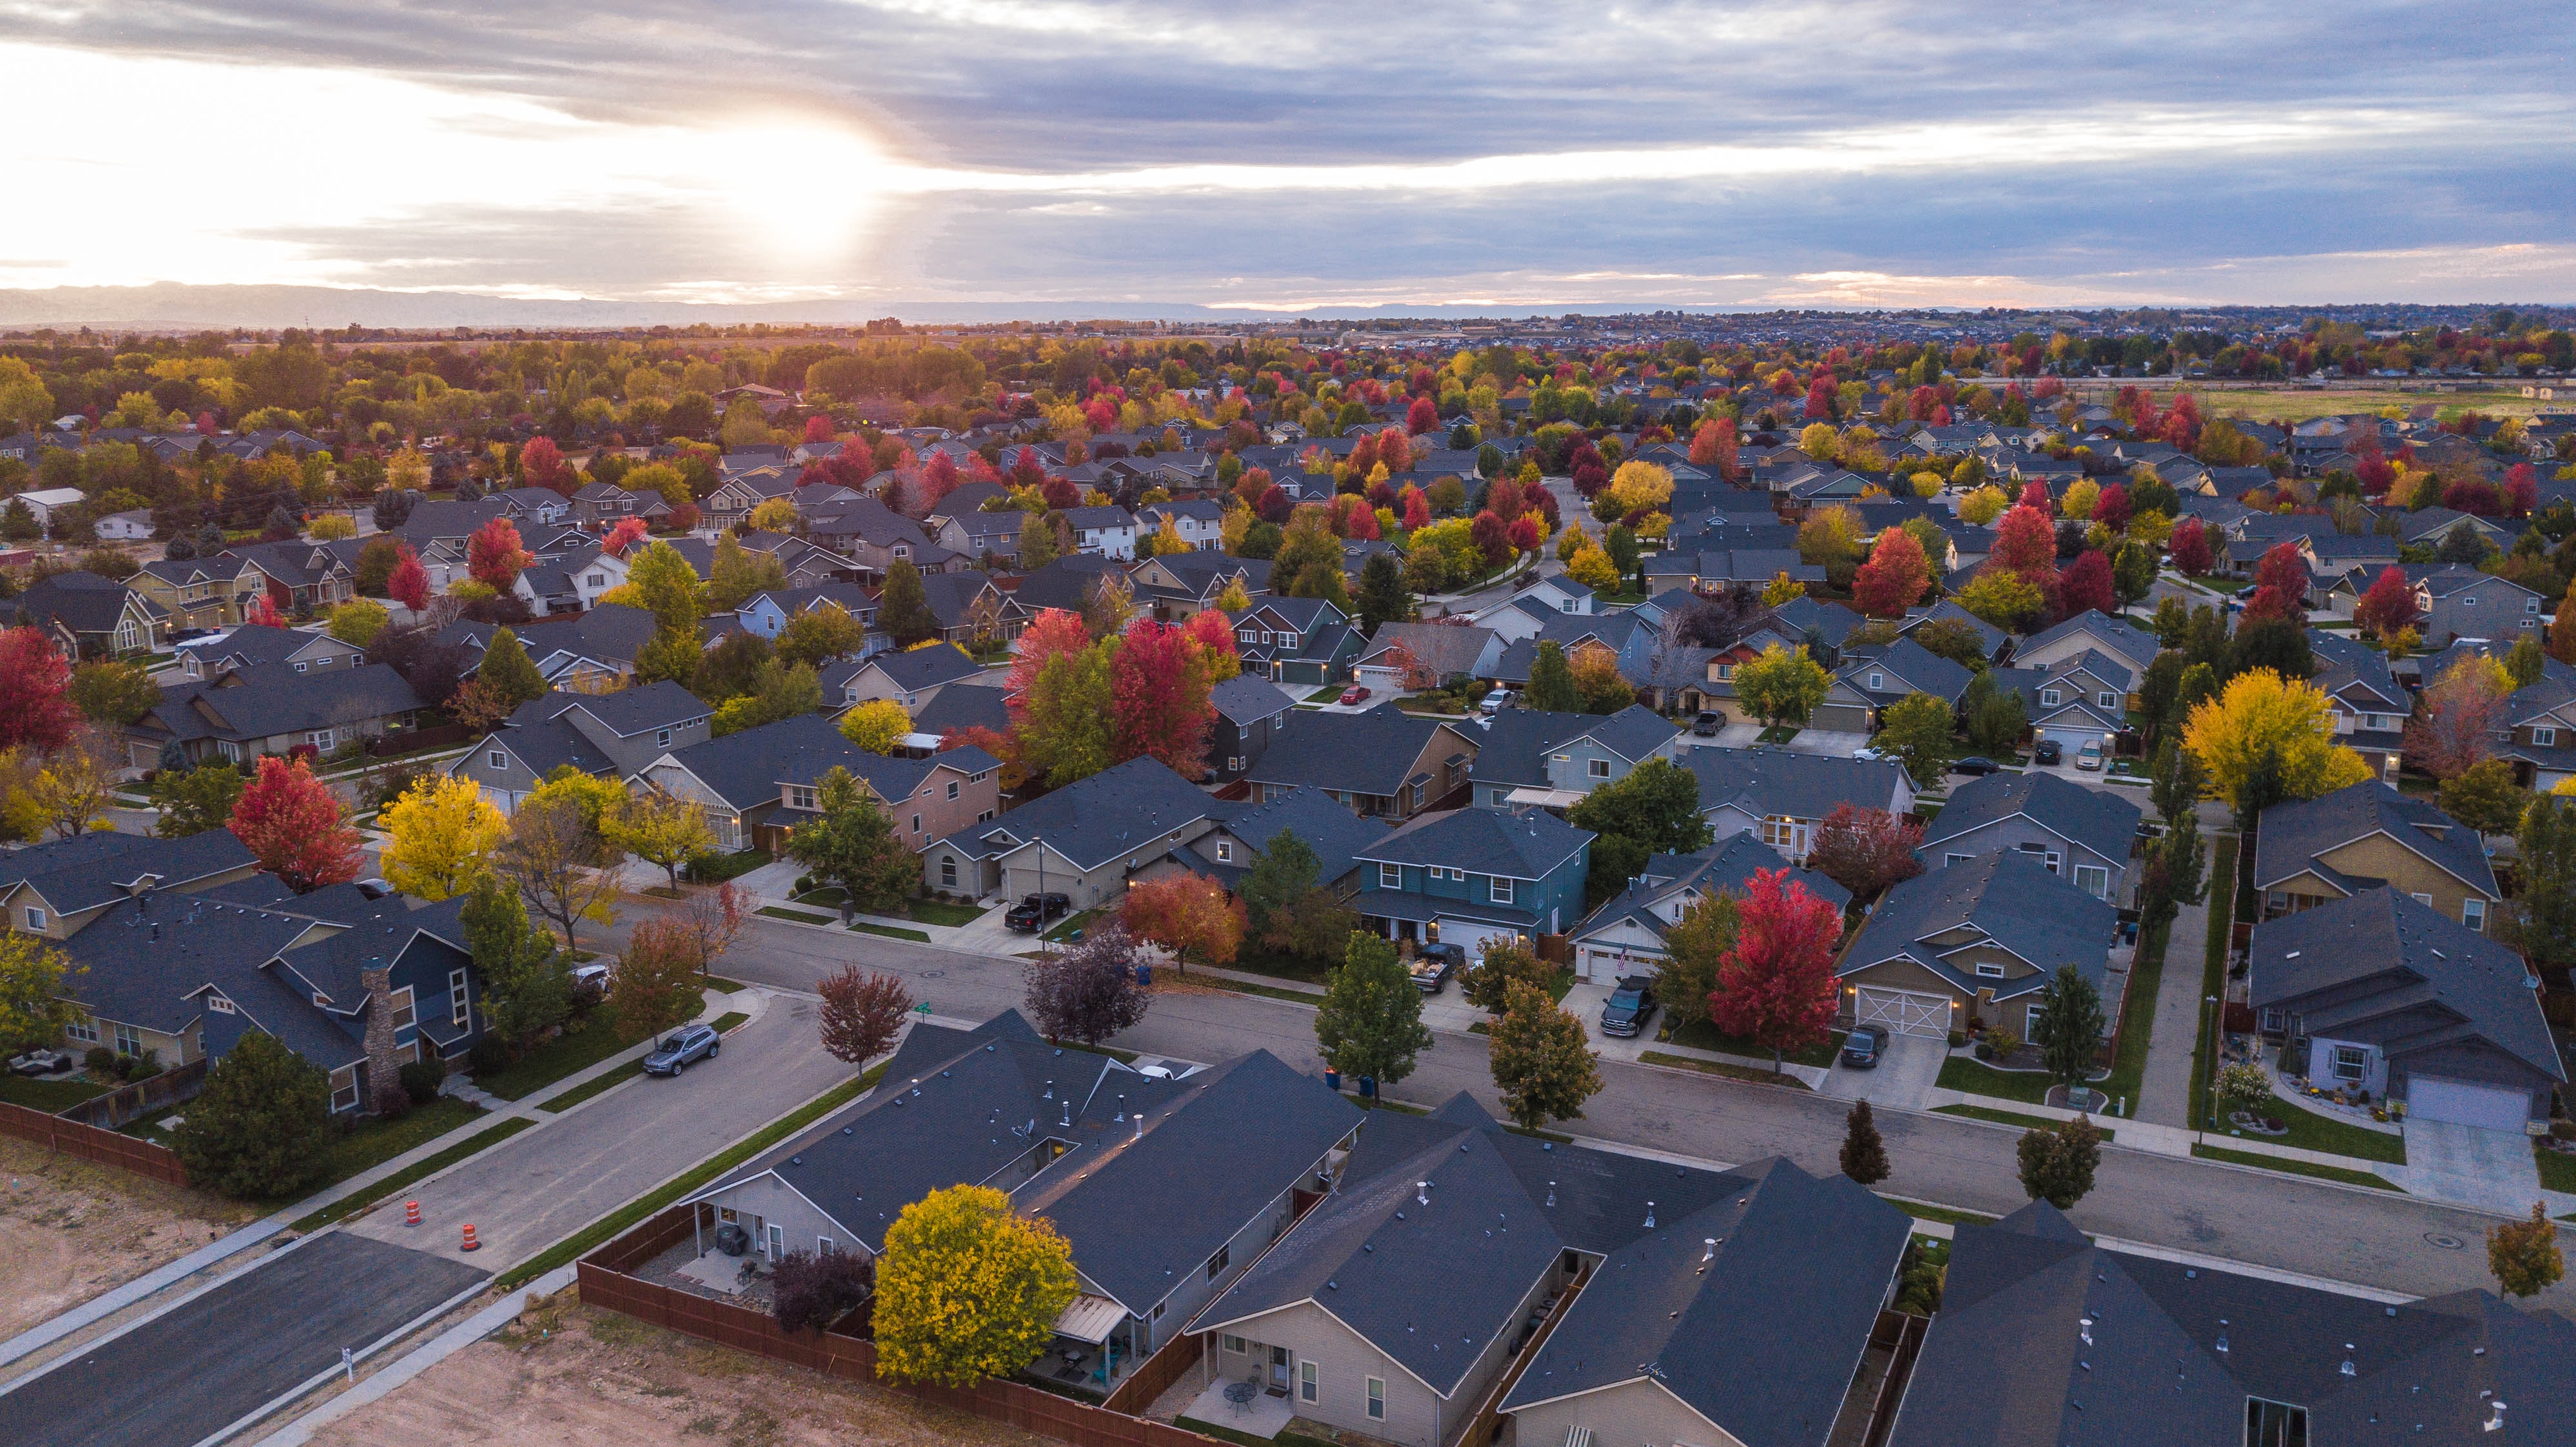 Bird's eye view of a neighborhood in fall